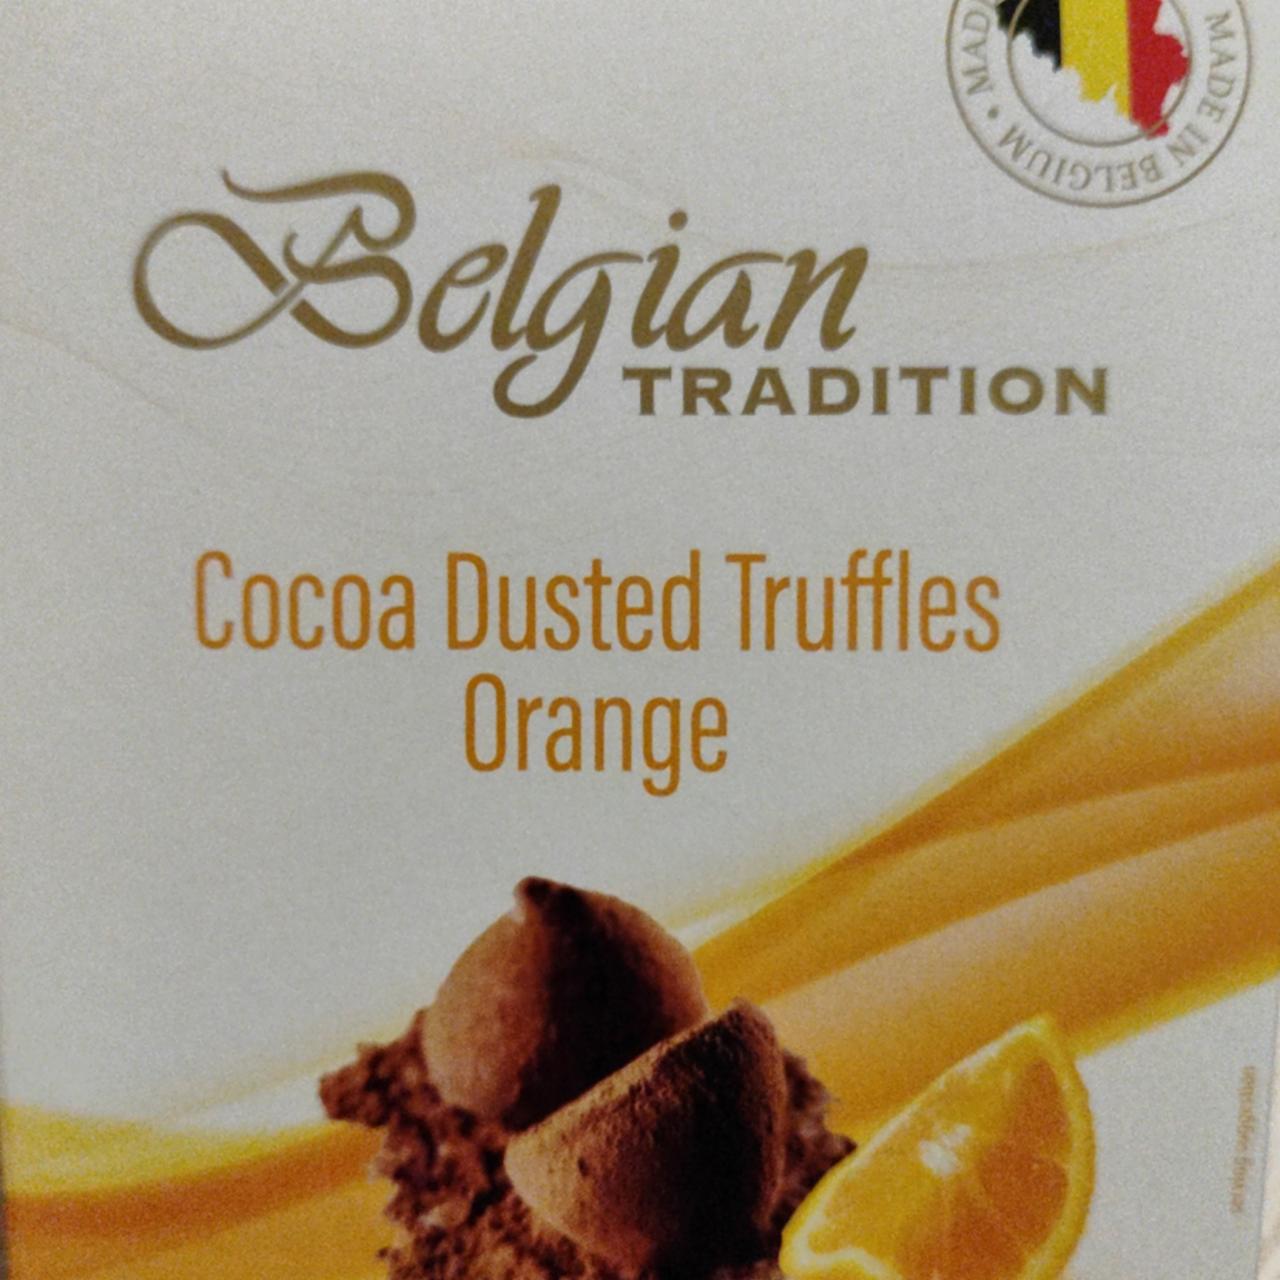 Фото - Cocoa Dusted Truffles Orange Belgian Tradition